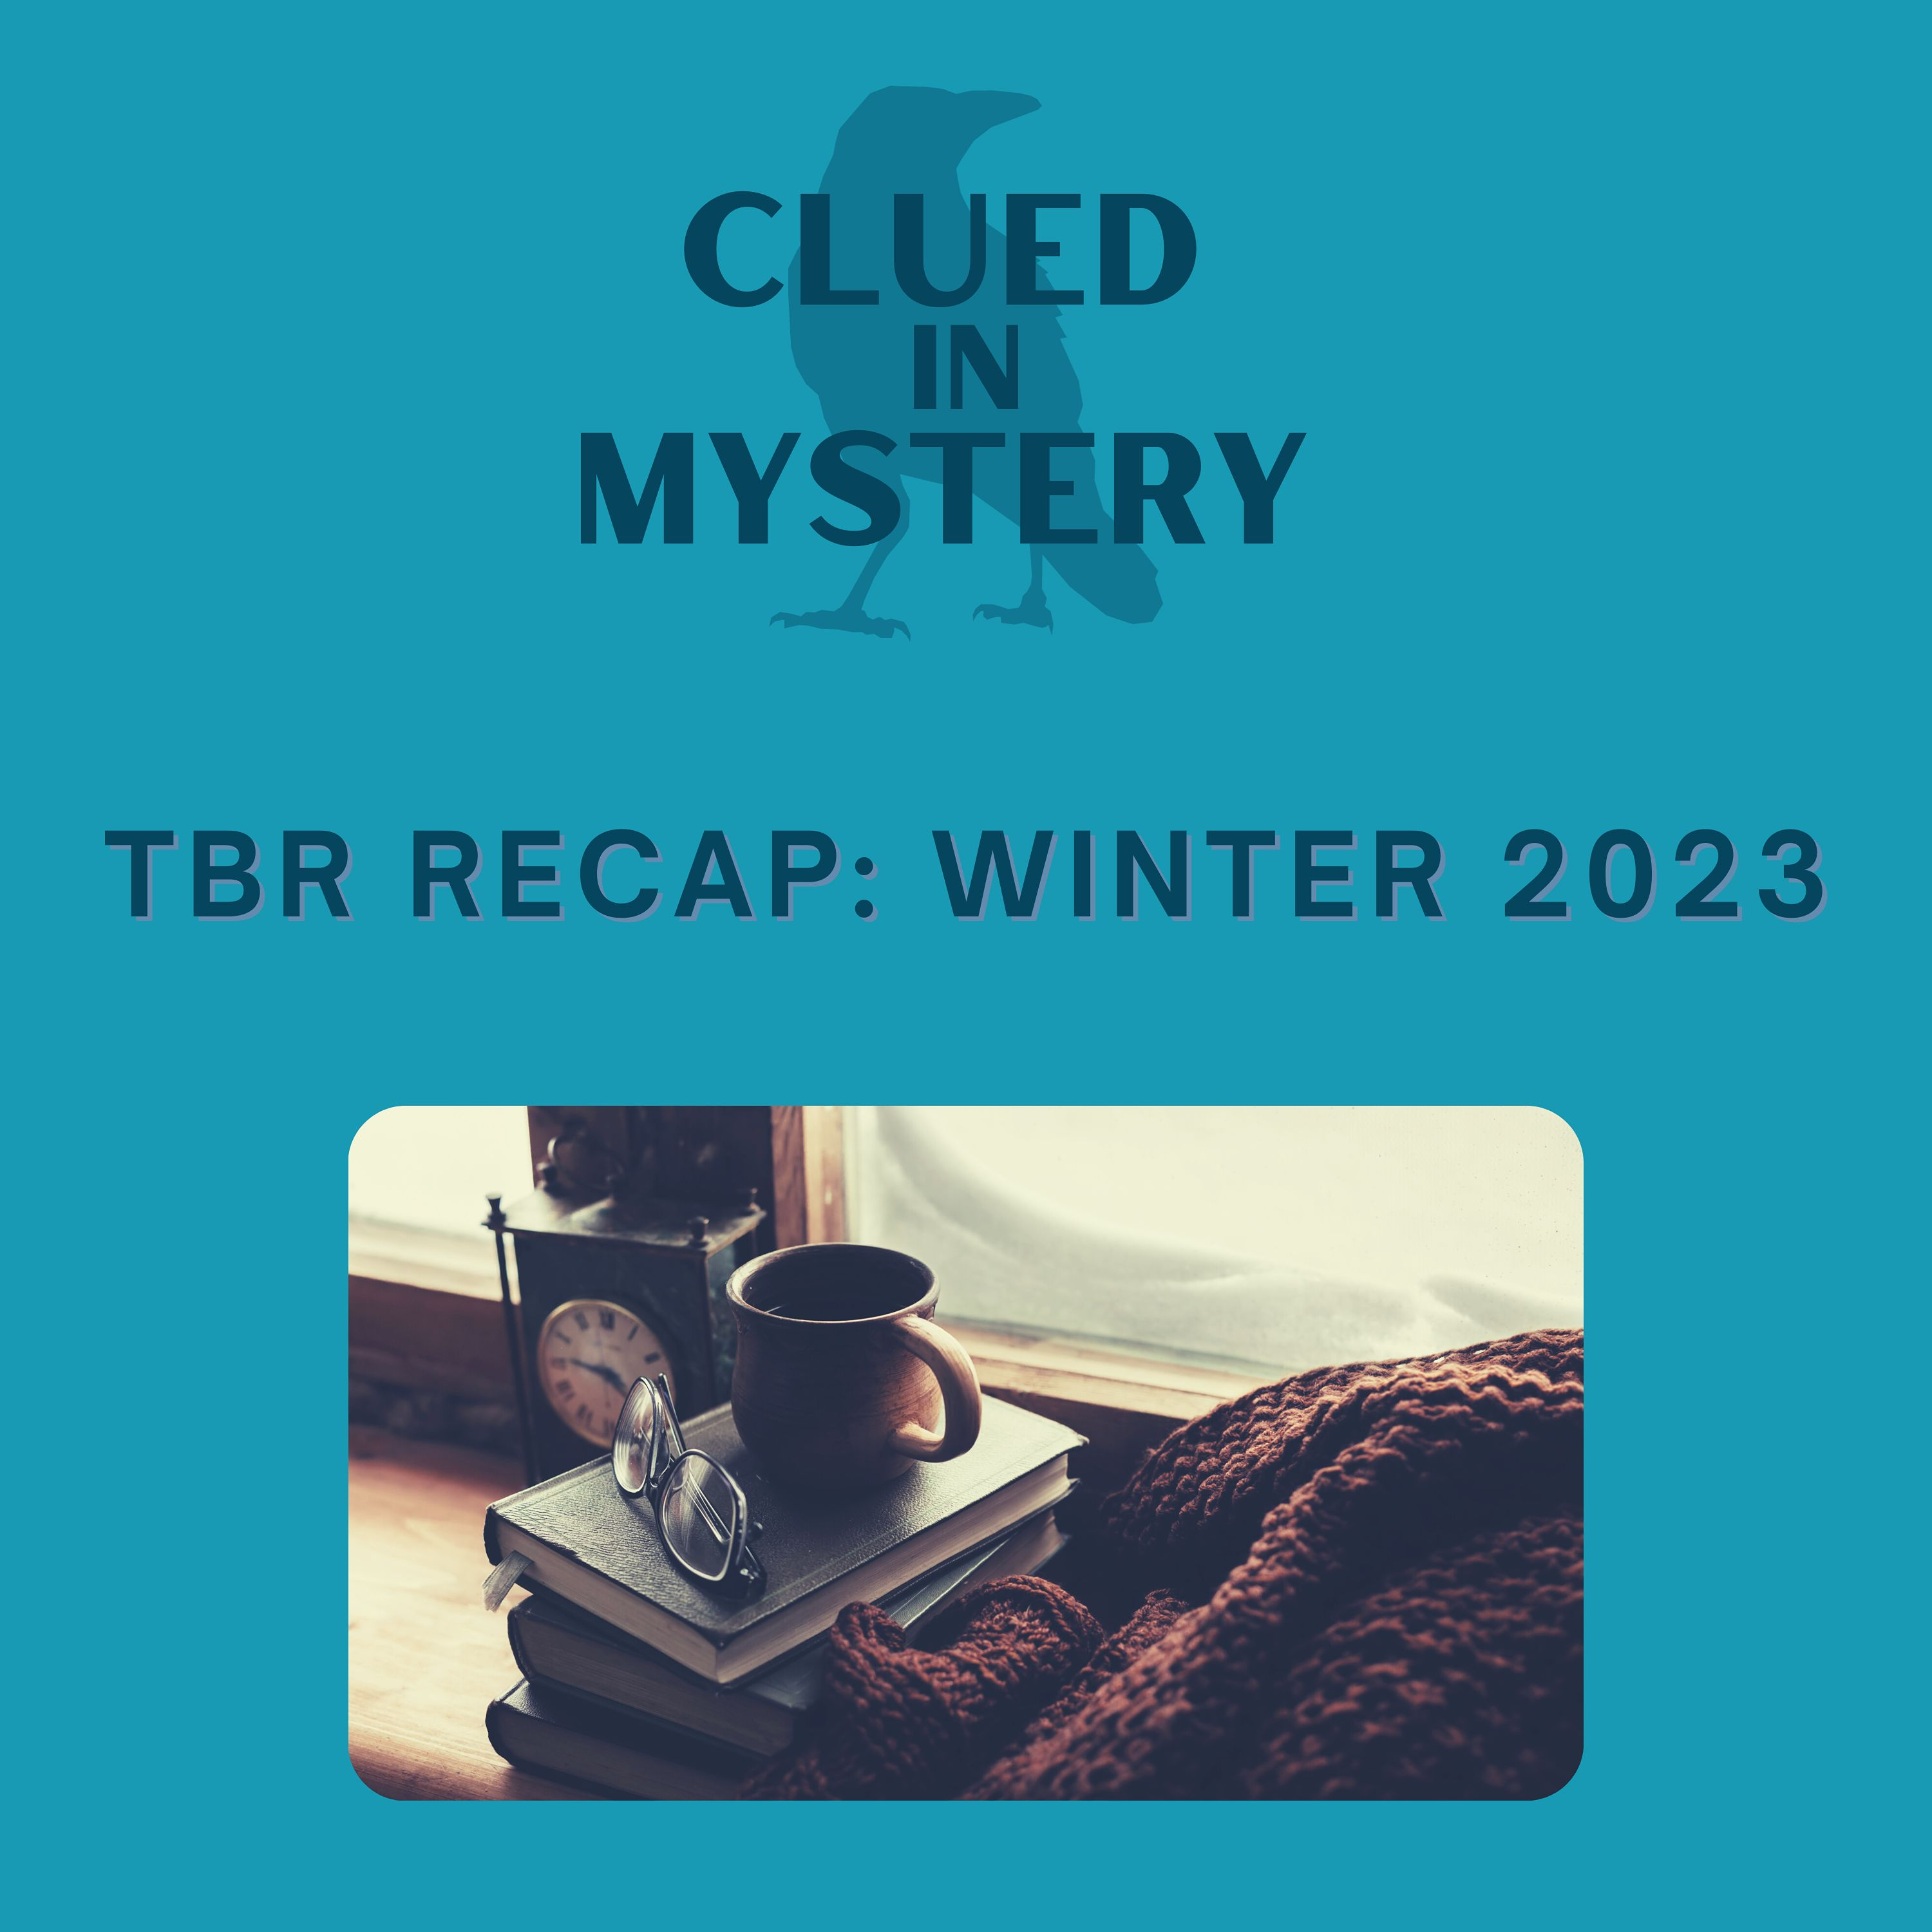 Winter 2023 TBR recap